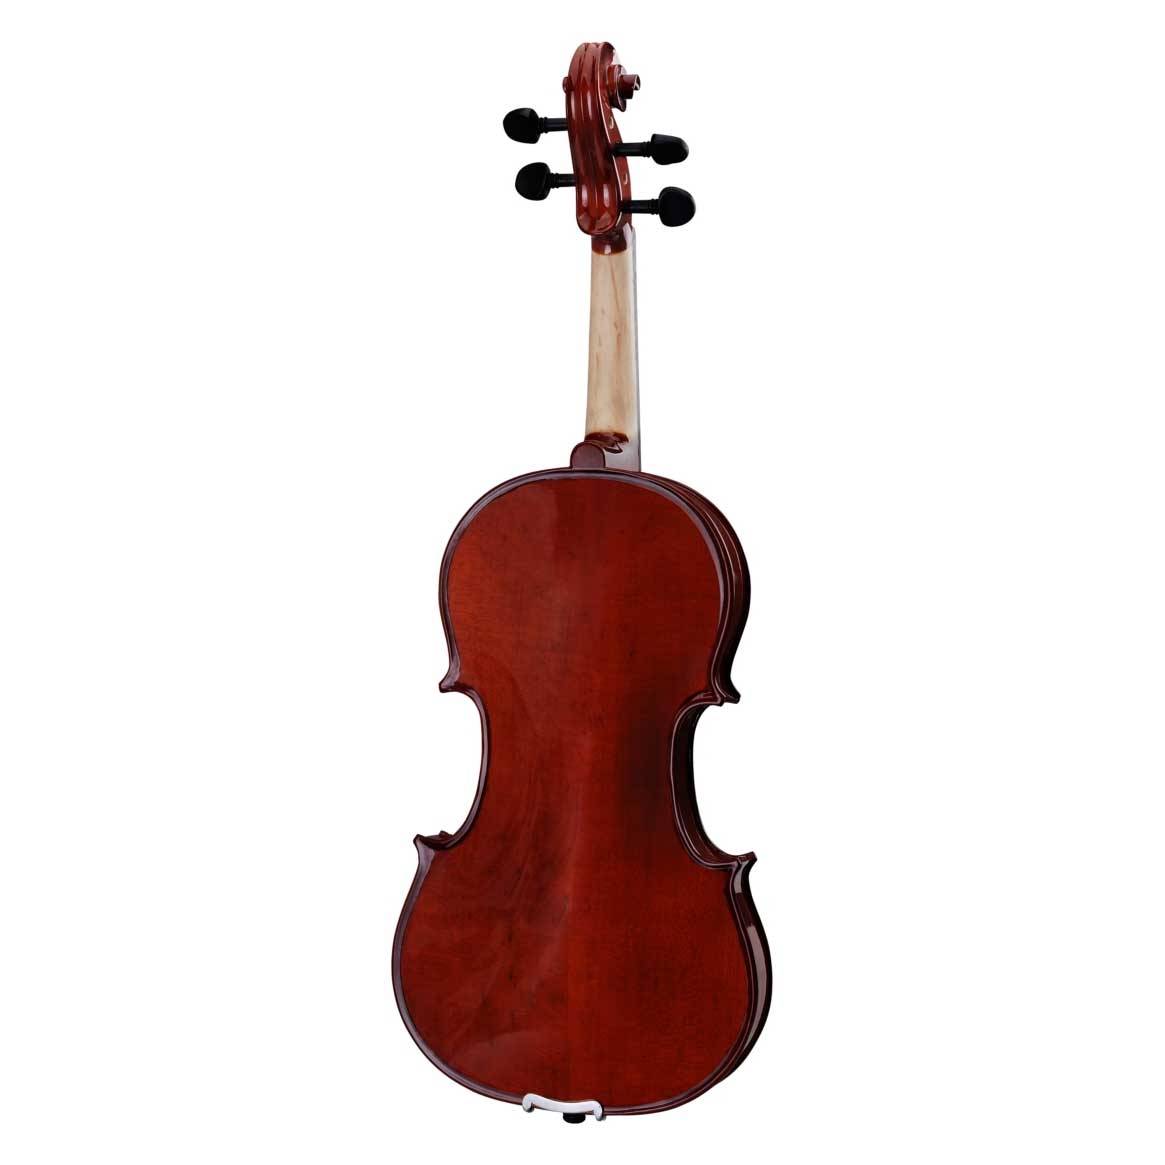 SOUNDSATION VSVI-44 Virtuoso Student Violin 4/4